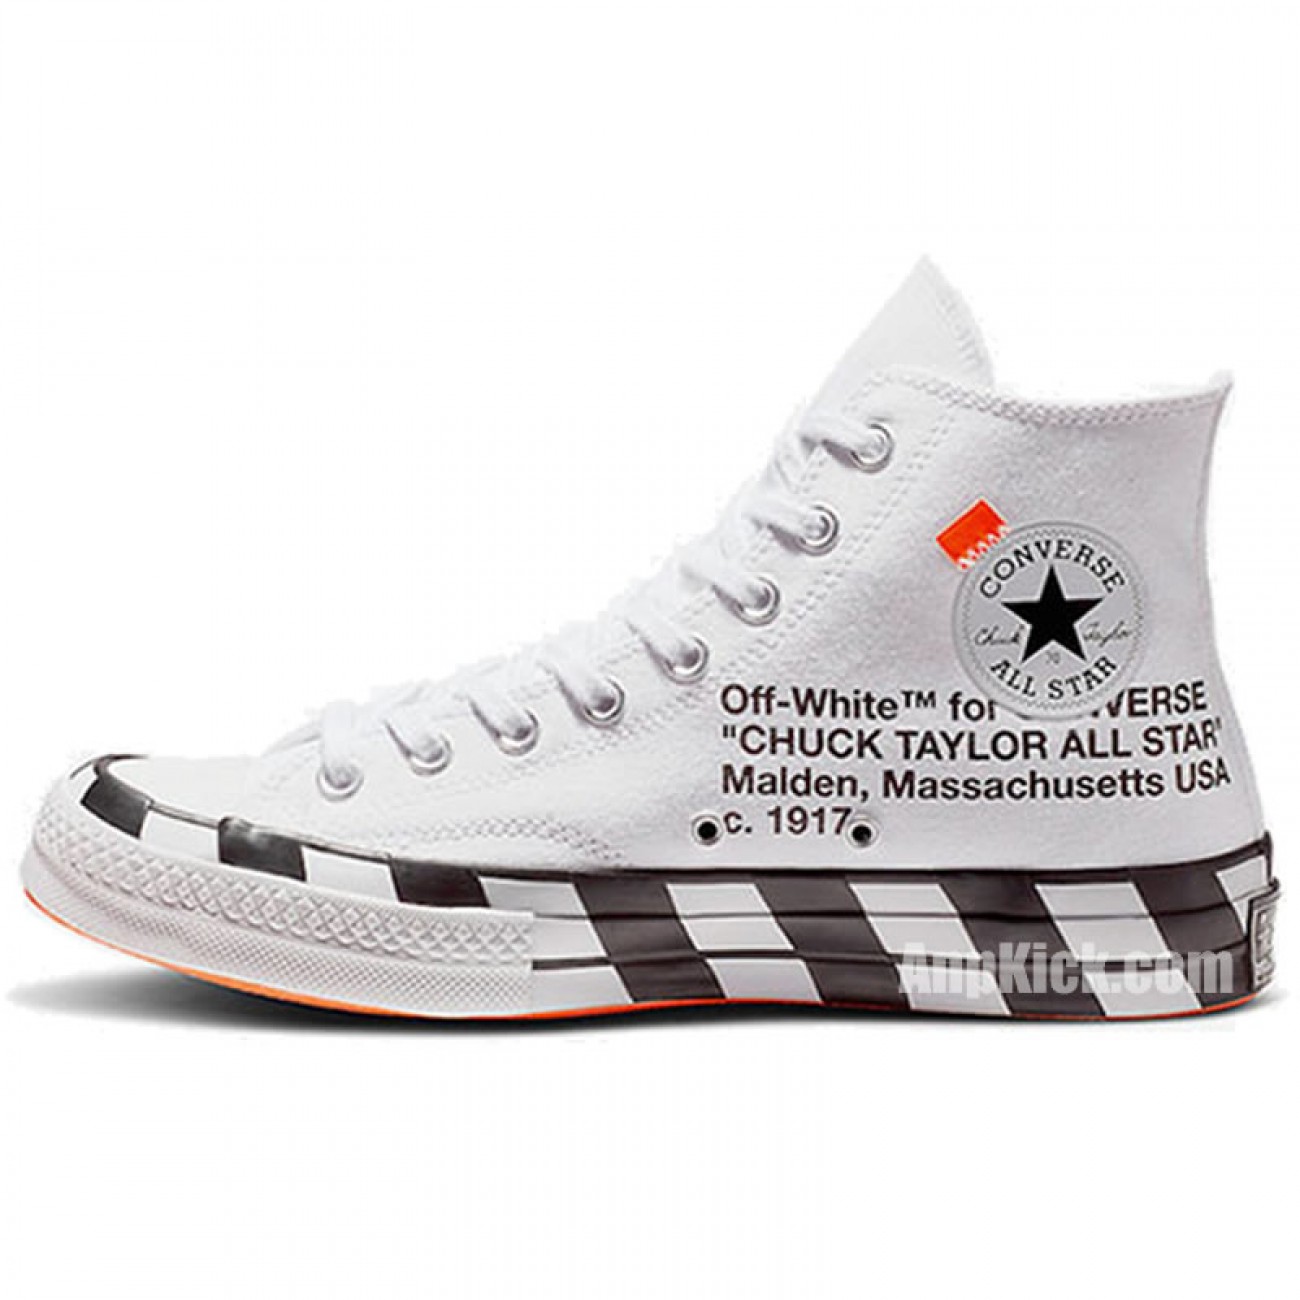 OFF-WHITE x Converse Chuck 70 "Stripe / White" High Tops Shoes 163862C